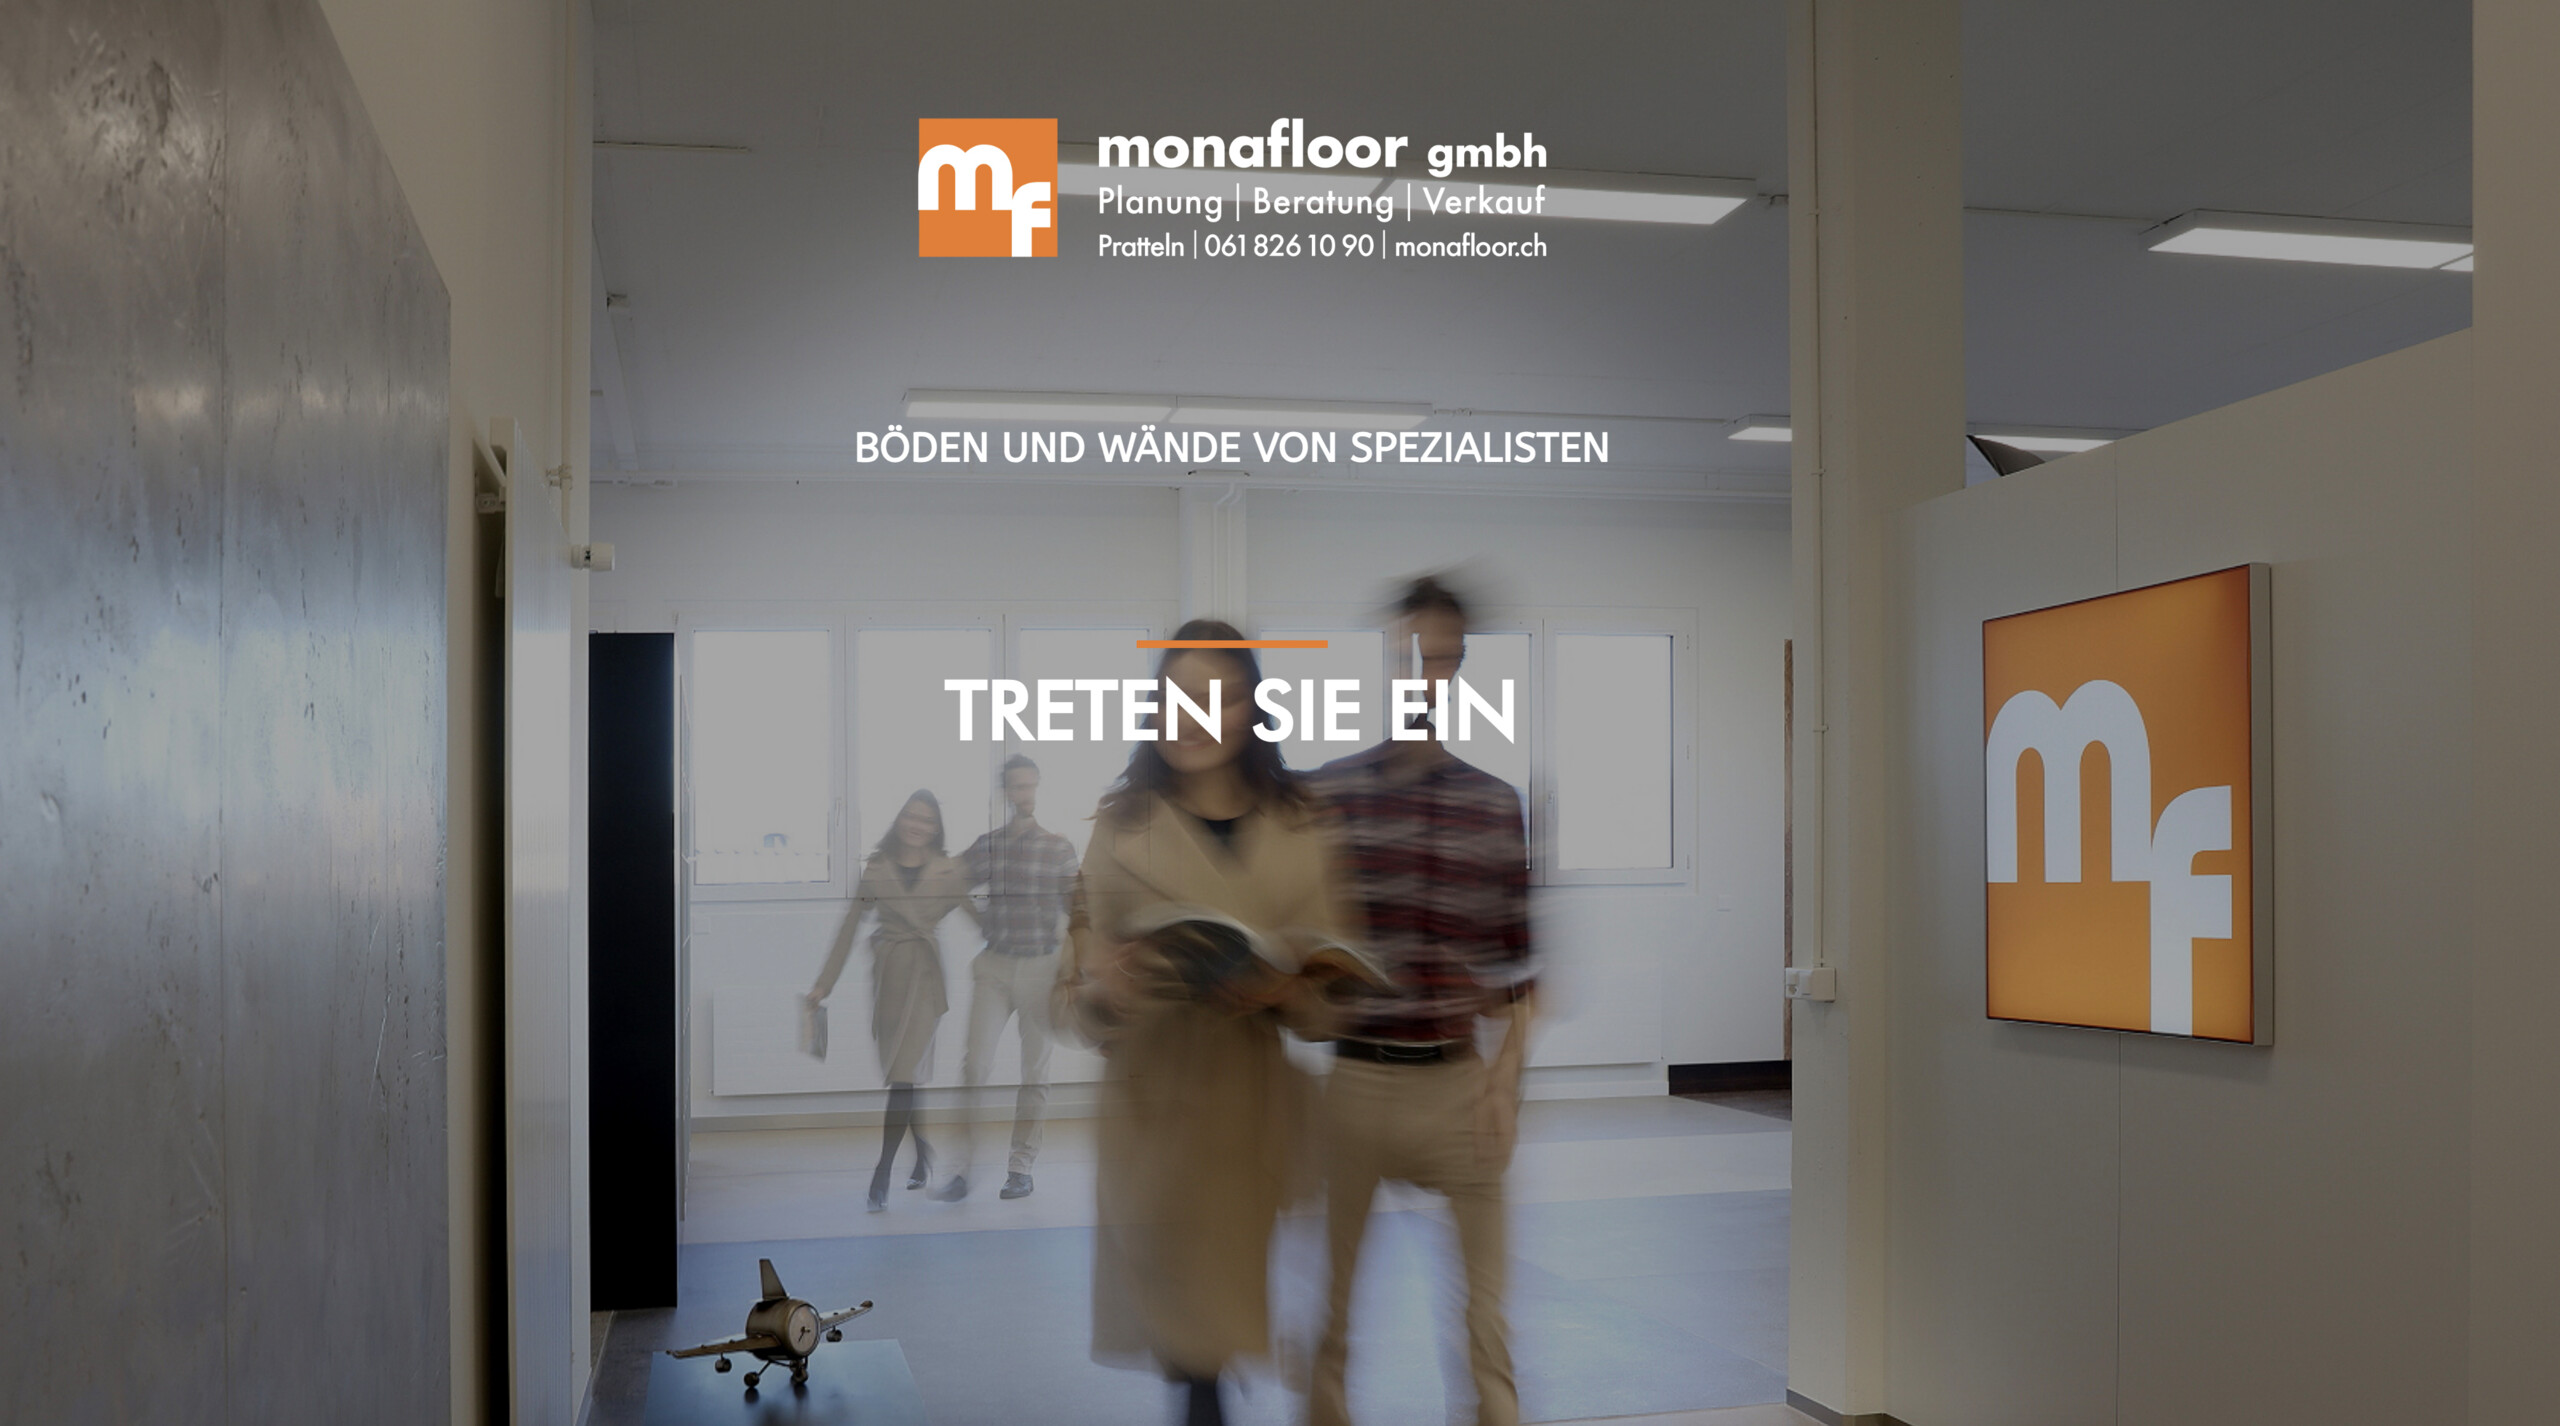 monafloor gmbh: Neue Firma, neue Website